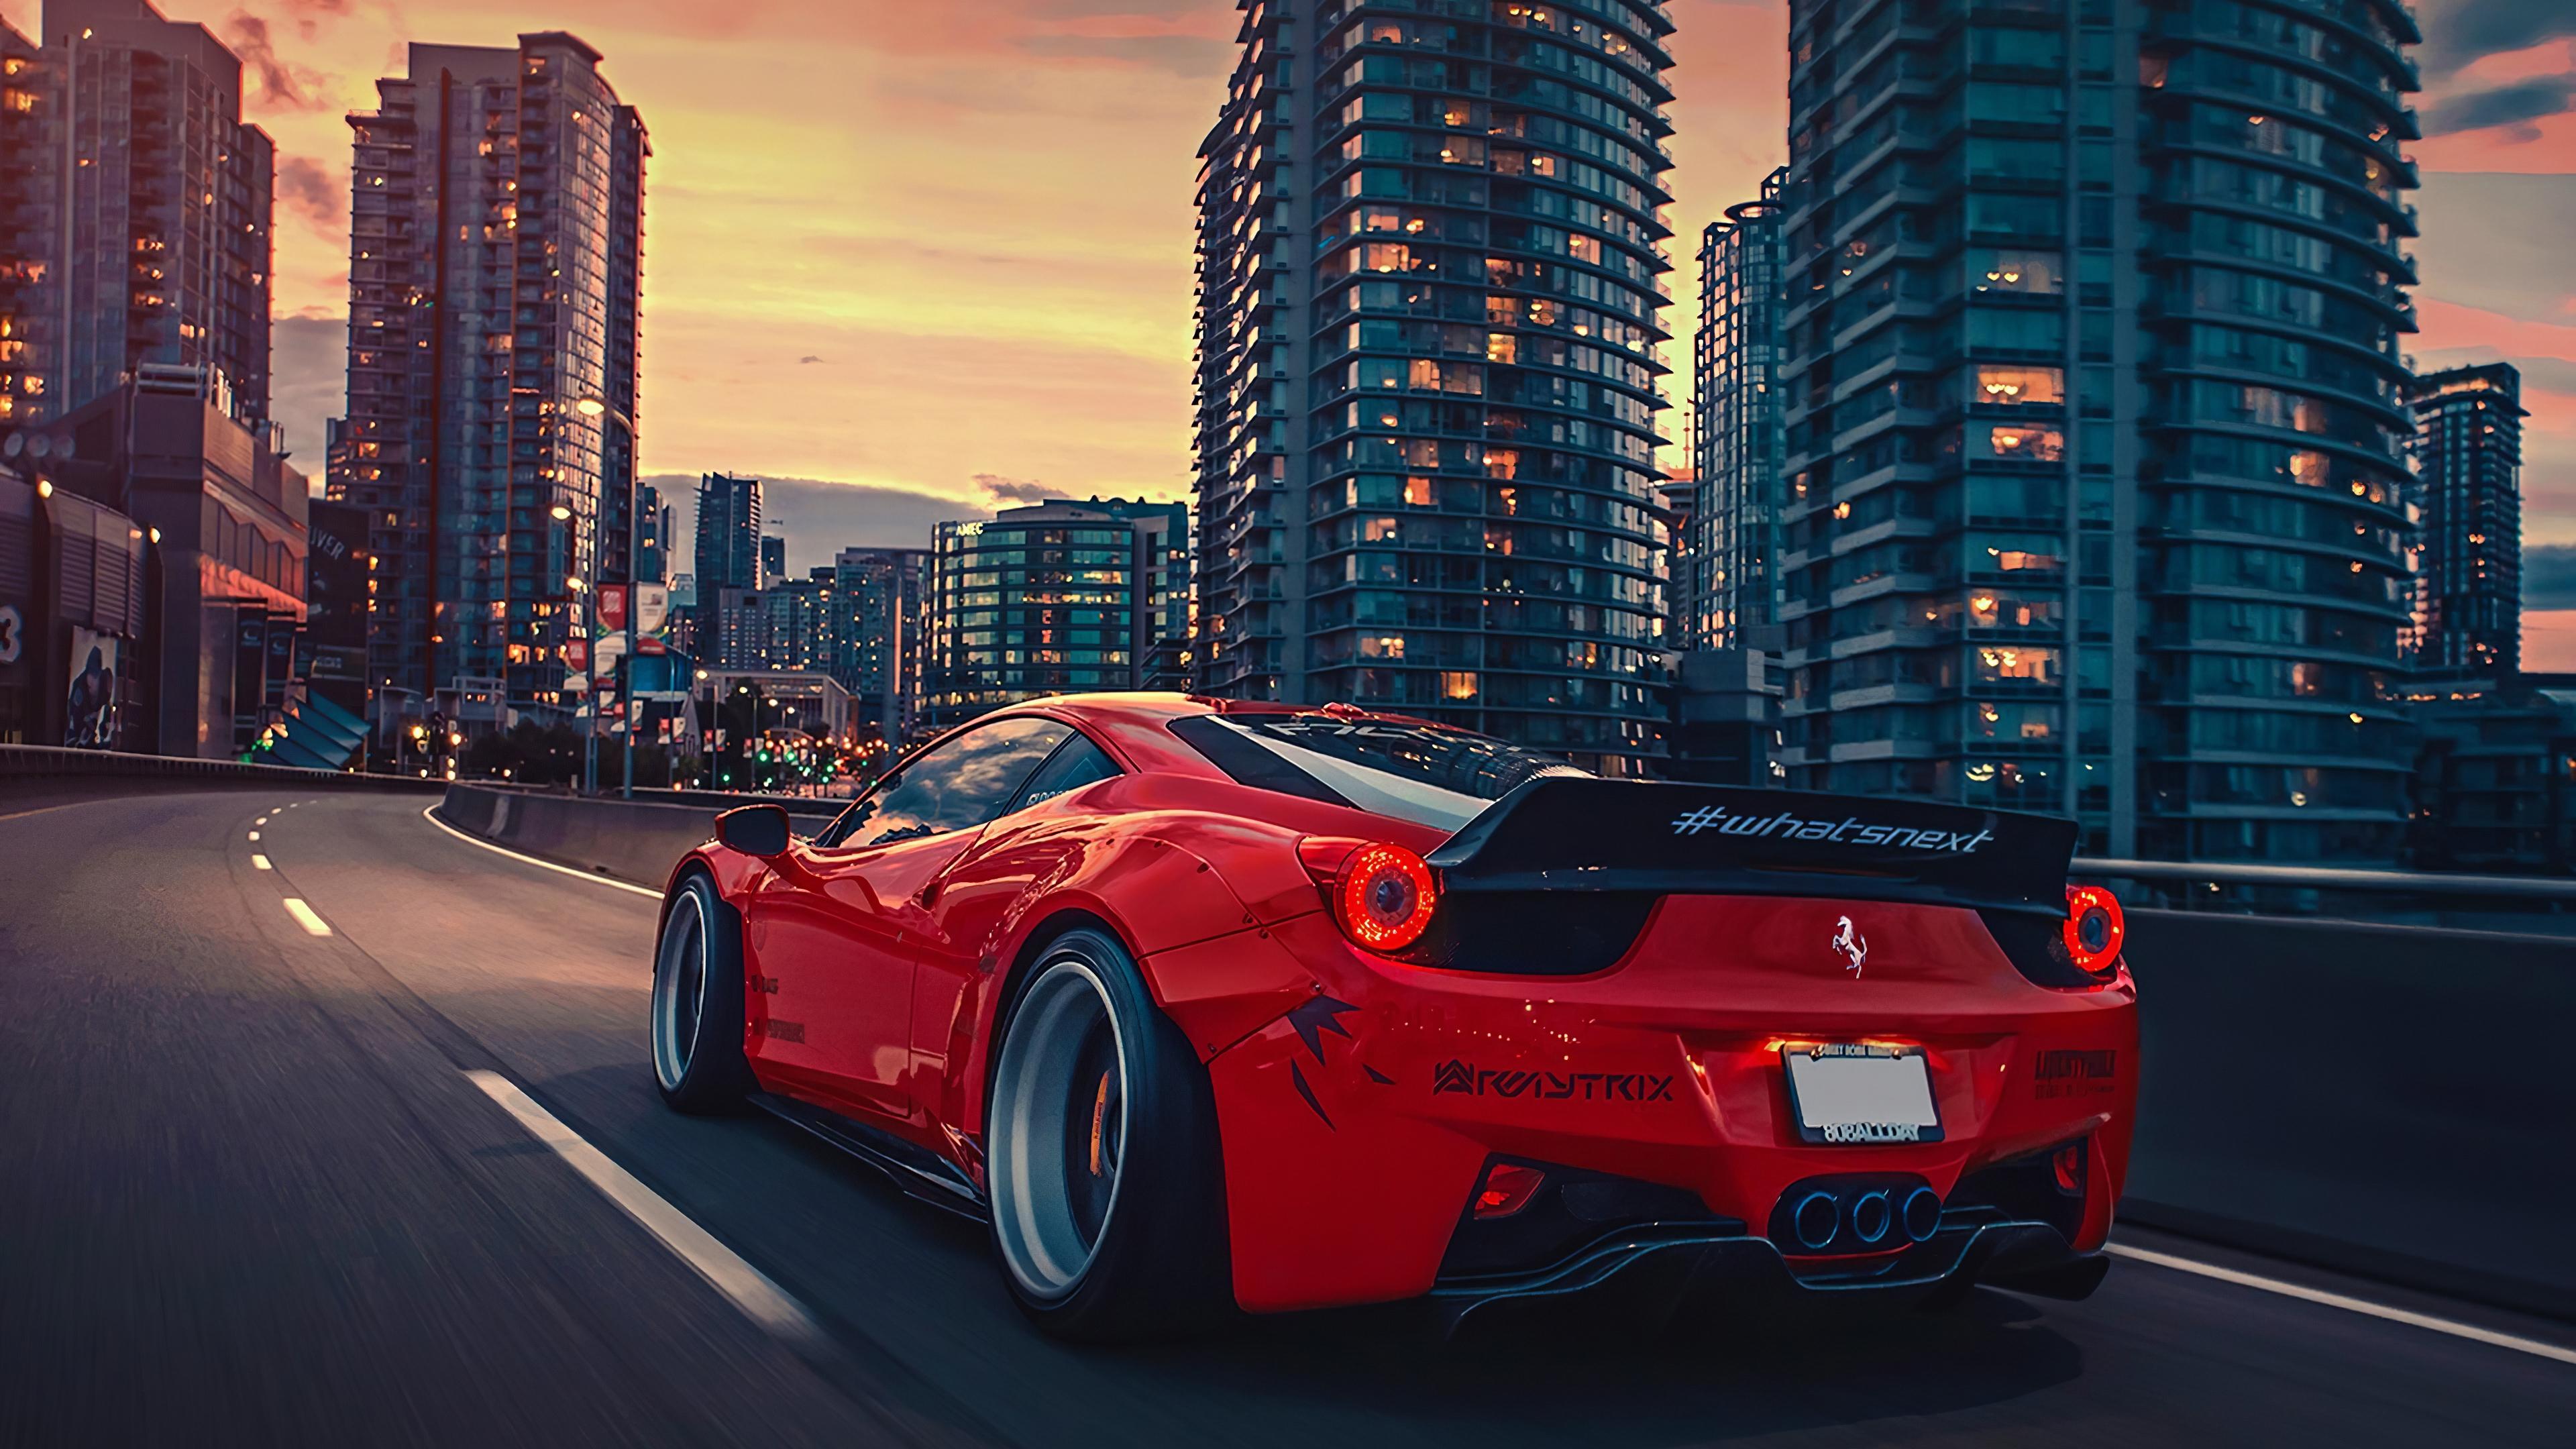 3840 x 2160 · jpeg - Ferrari 458 City 4k, HD Cars, 4k Wallpapers, Images, Backgrounds ...